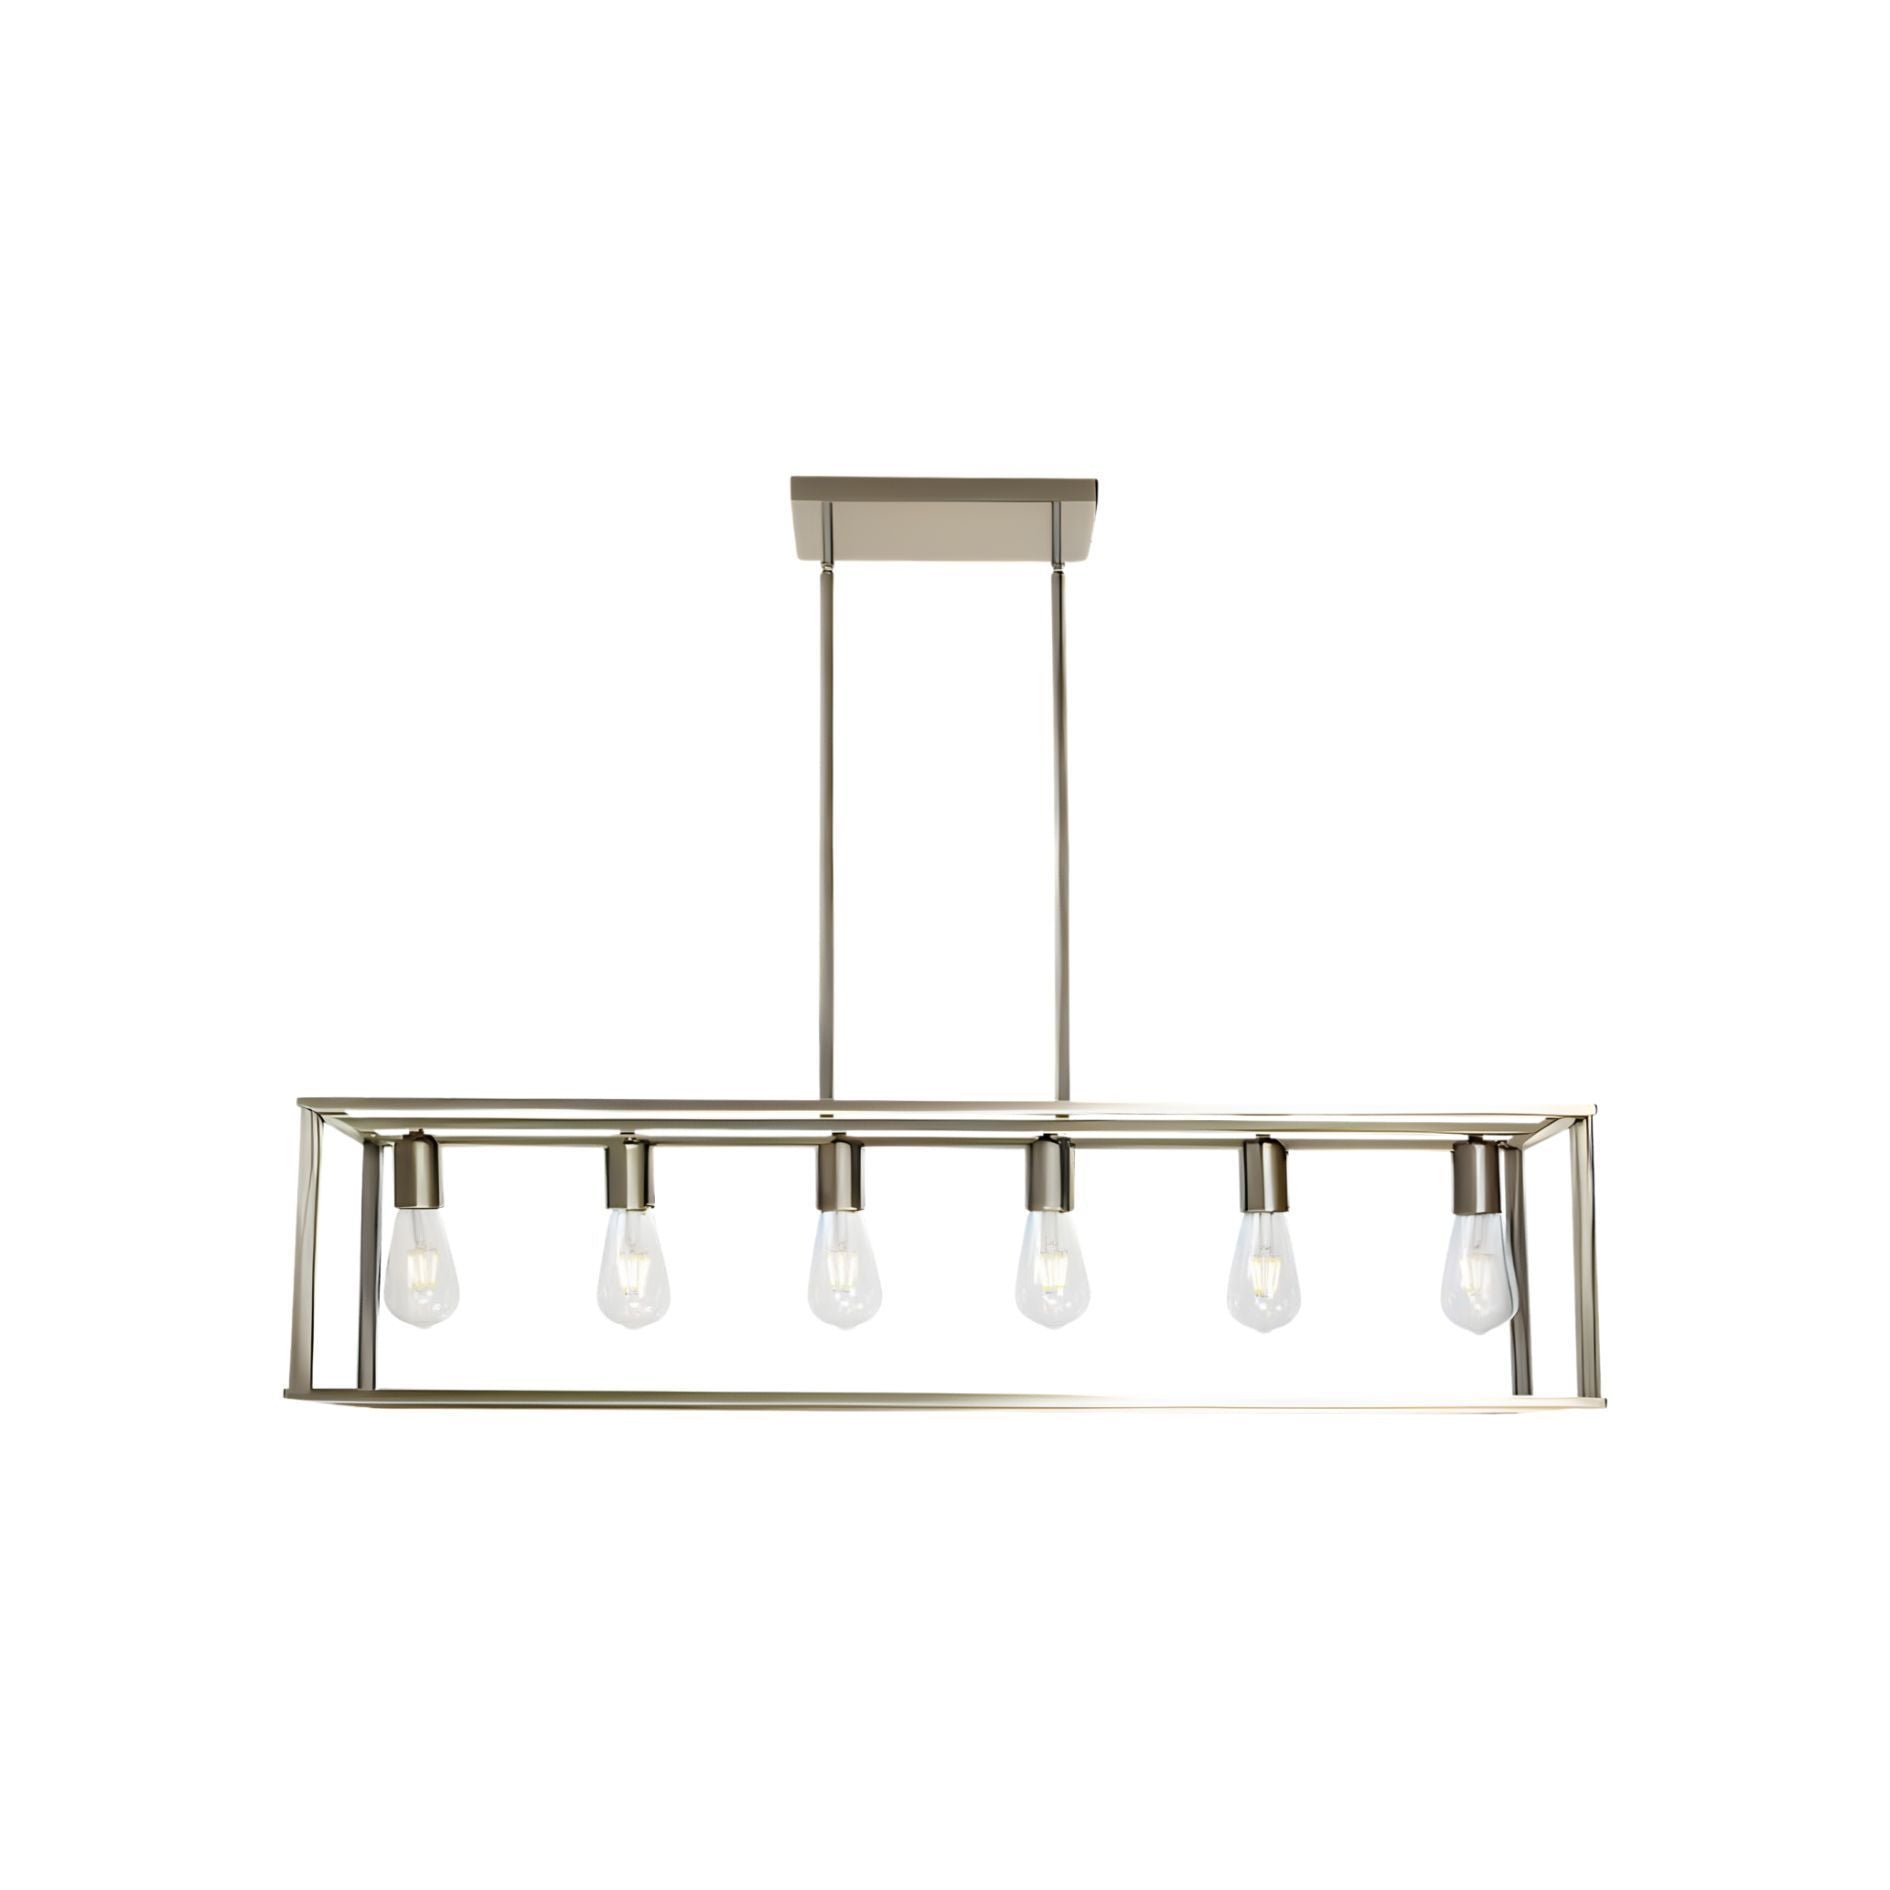 TM-HOME-6-Light-Rectangle-Chandelier-Linear-Pendant-Lighting-Brushed-Nickel-Metal-Cage-Ceiling-Light-Fixture-Lamps